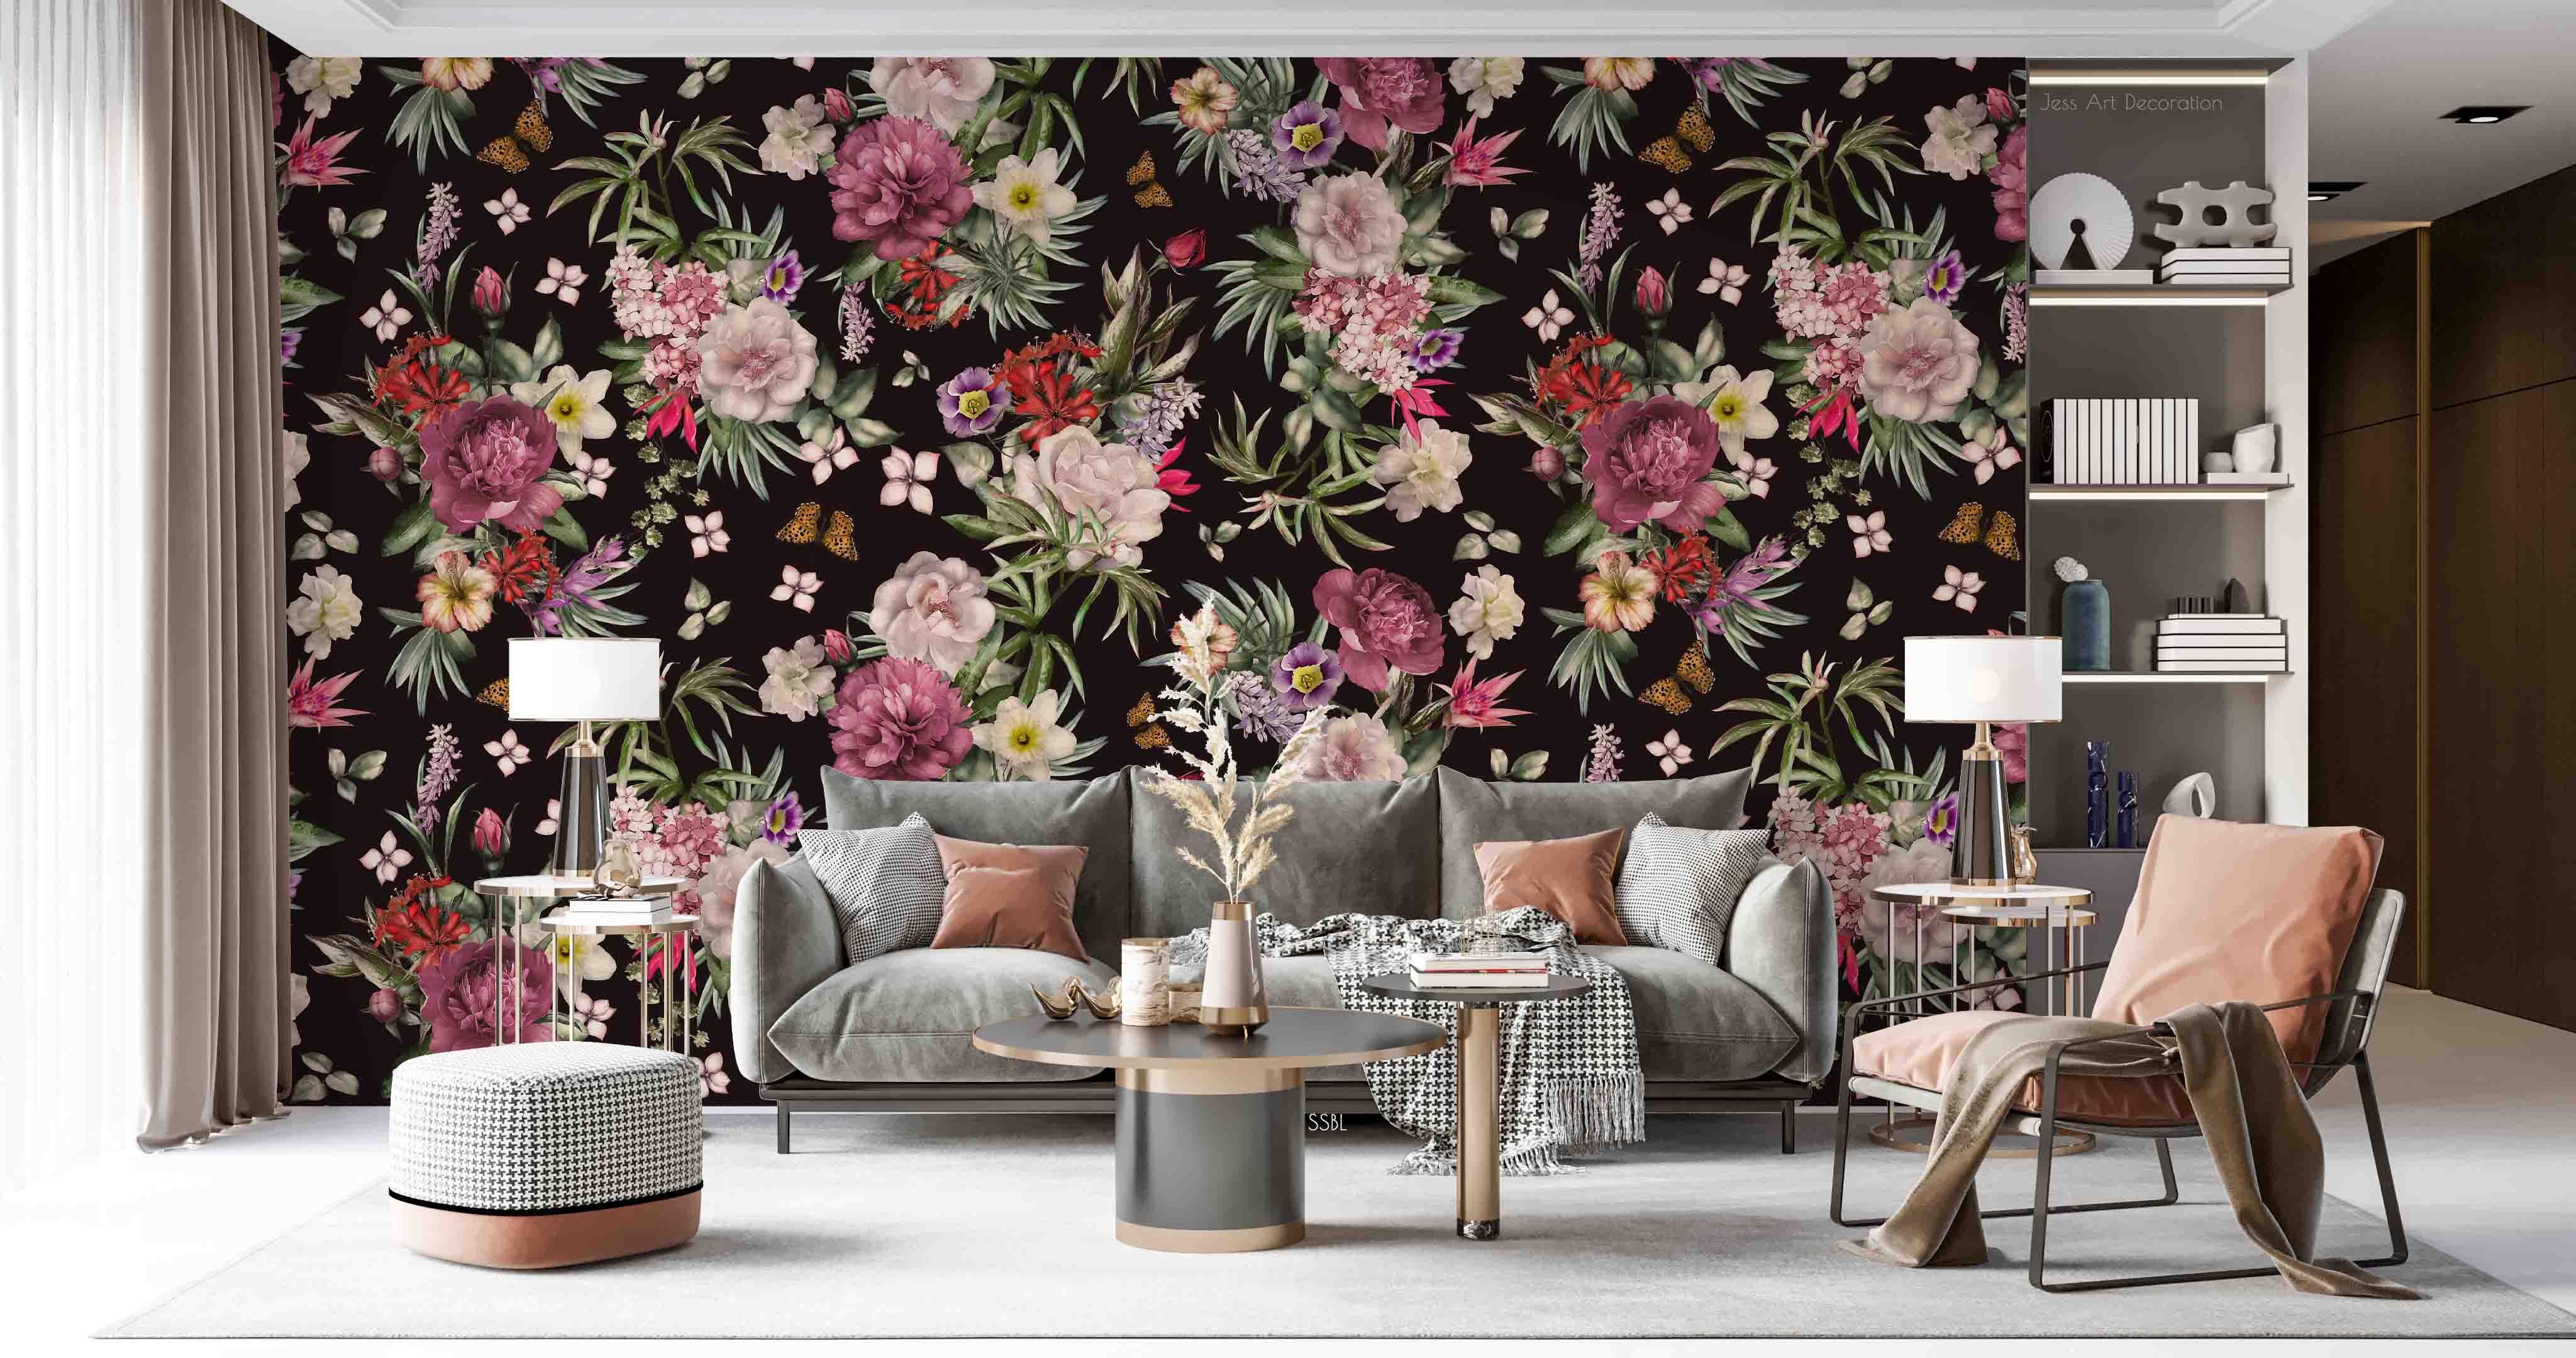 3D Vintage Baroque Art Flowers Black Background Wall Mural Wallpaper GD 3617- Jess Art Decoration